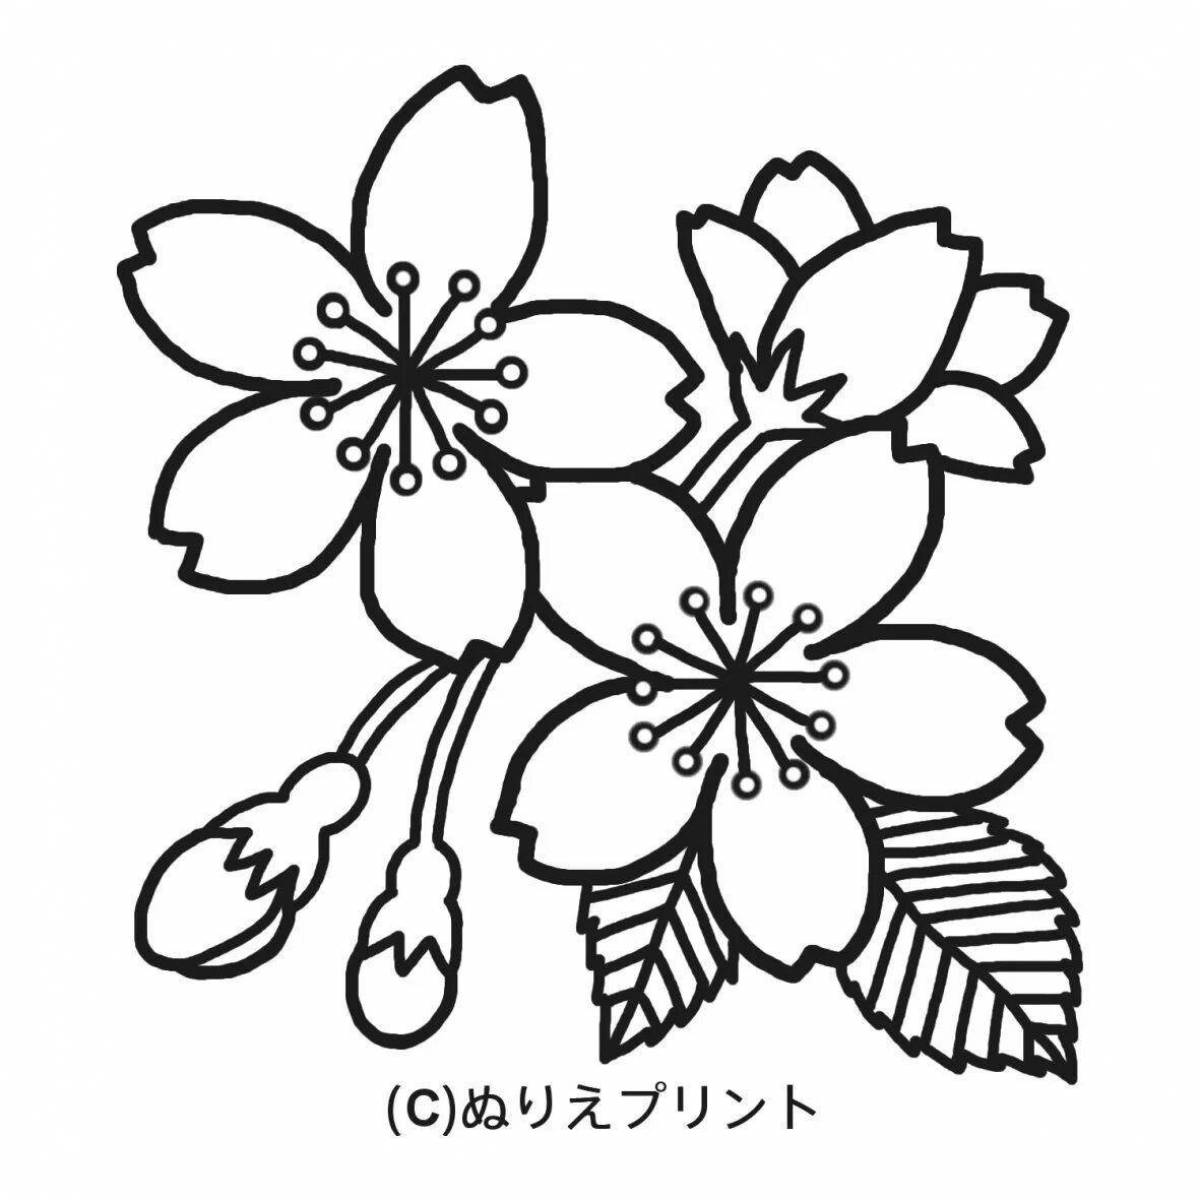 Glorious sakura branch coloring book for kids